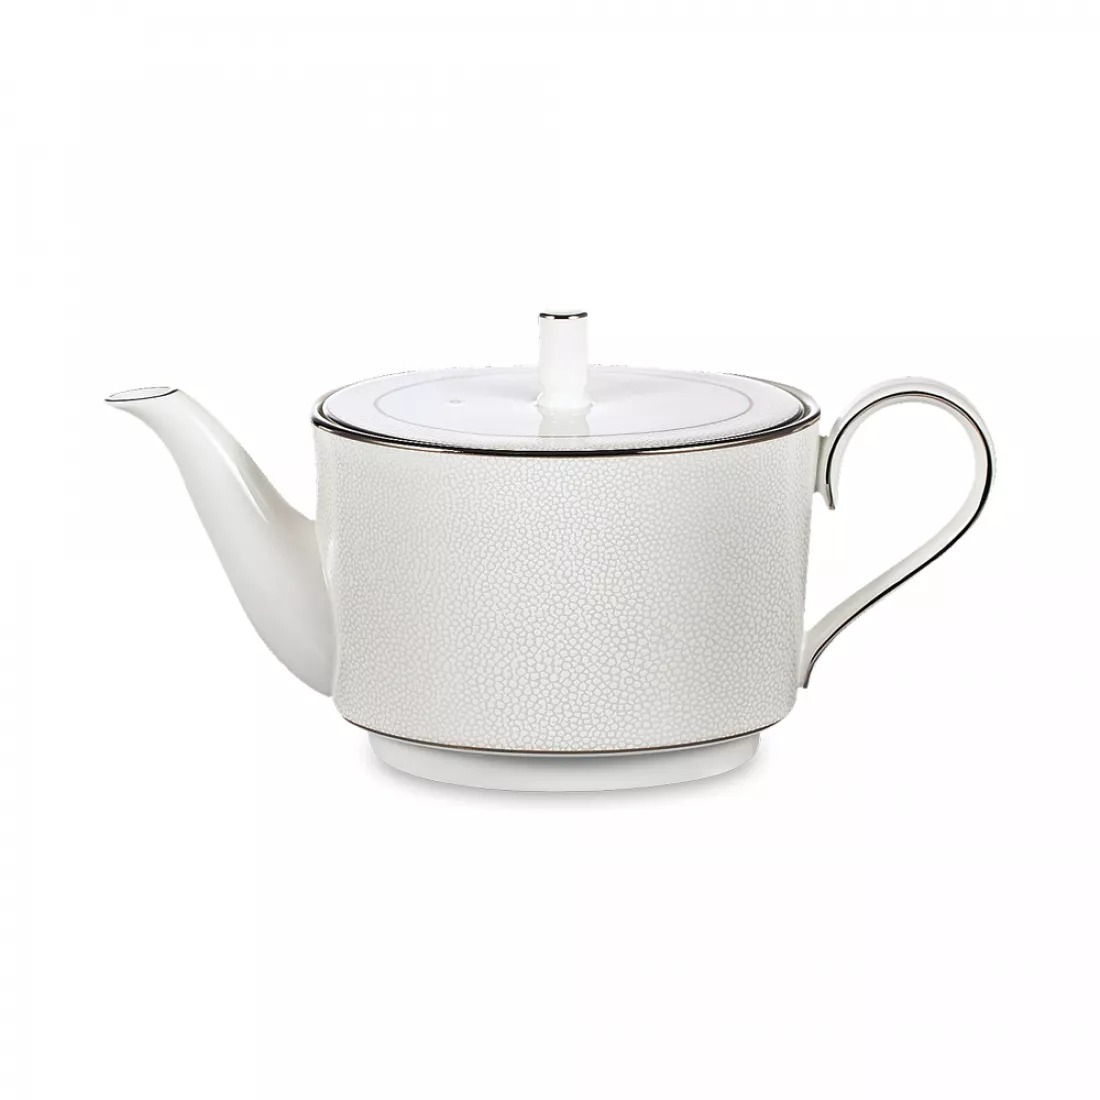 Заварочный чайник Narumi Белый жемчуг 900 мл чайник narumi великолепие 950 мл